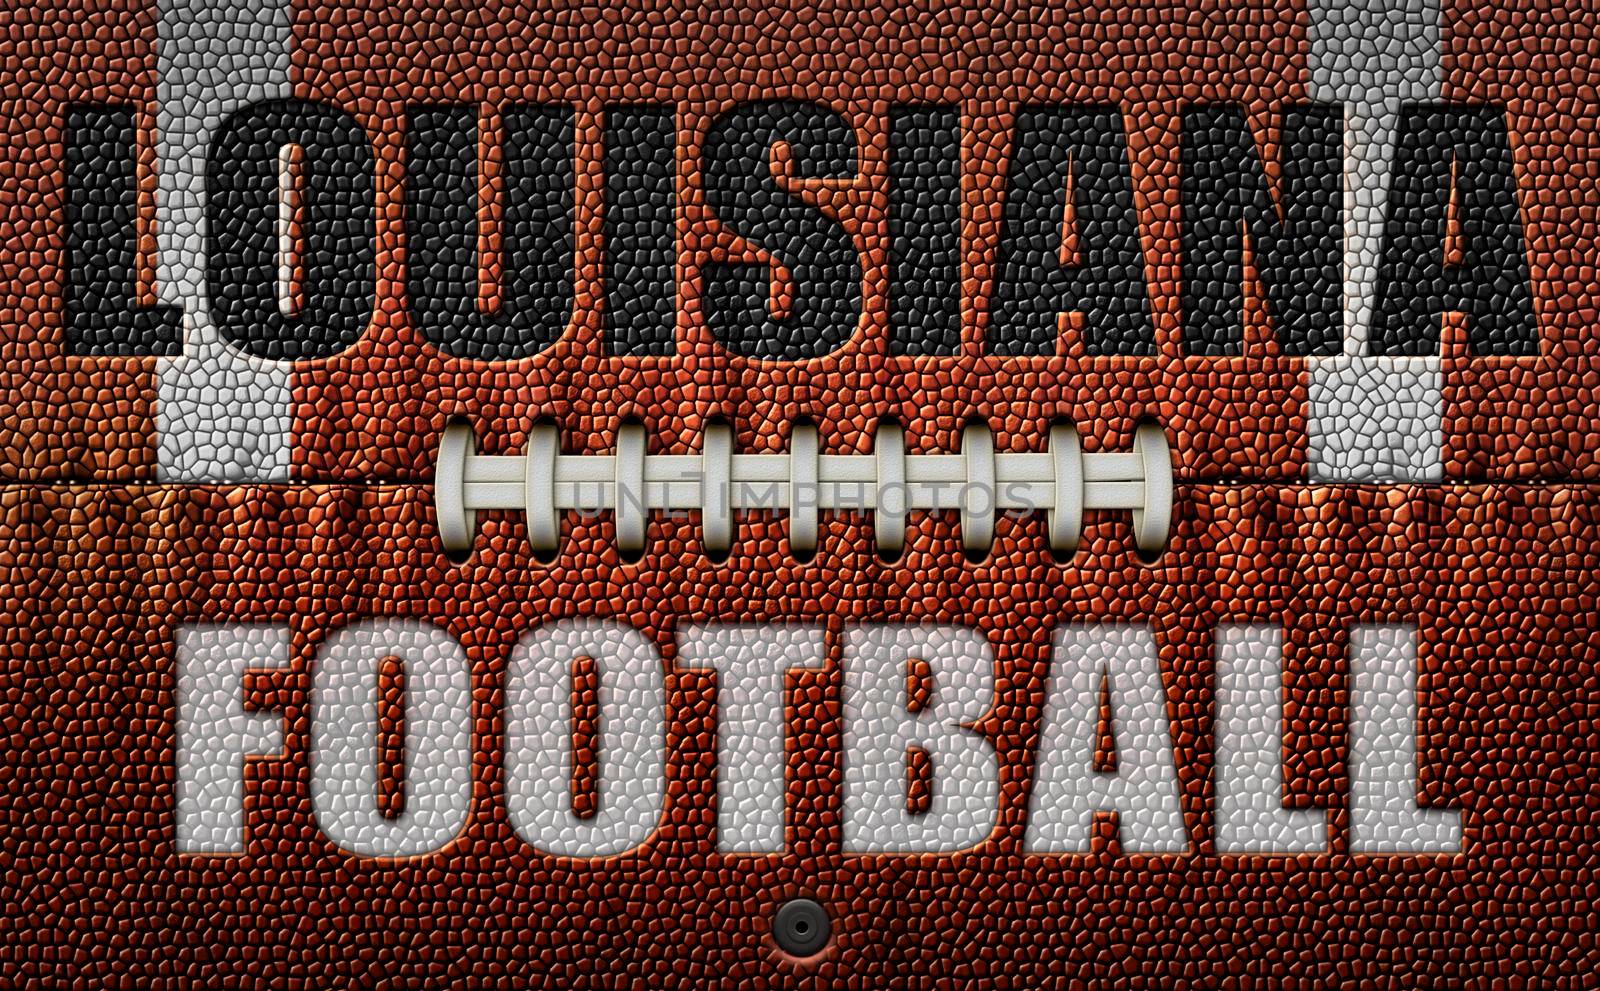 Louisiana Football Text on a Flattened Football by jimlarkin